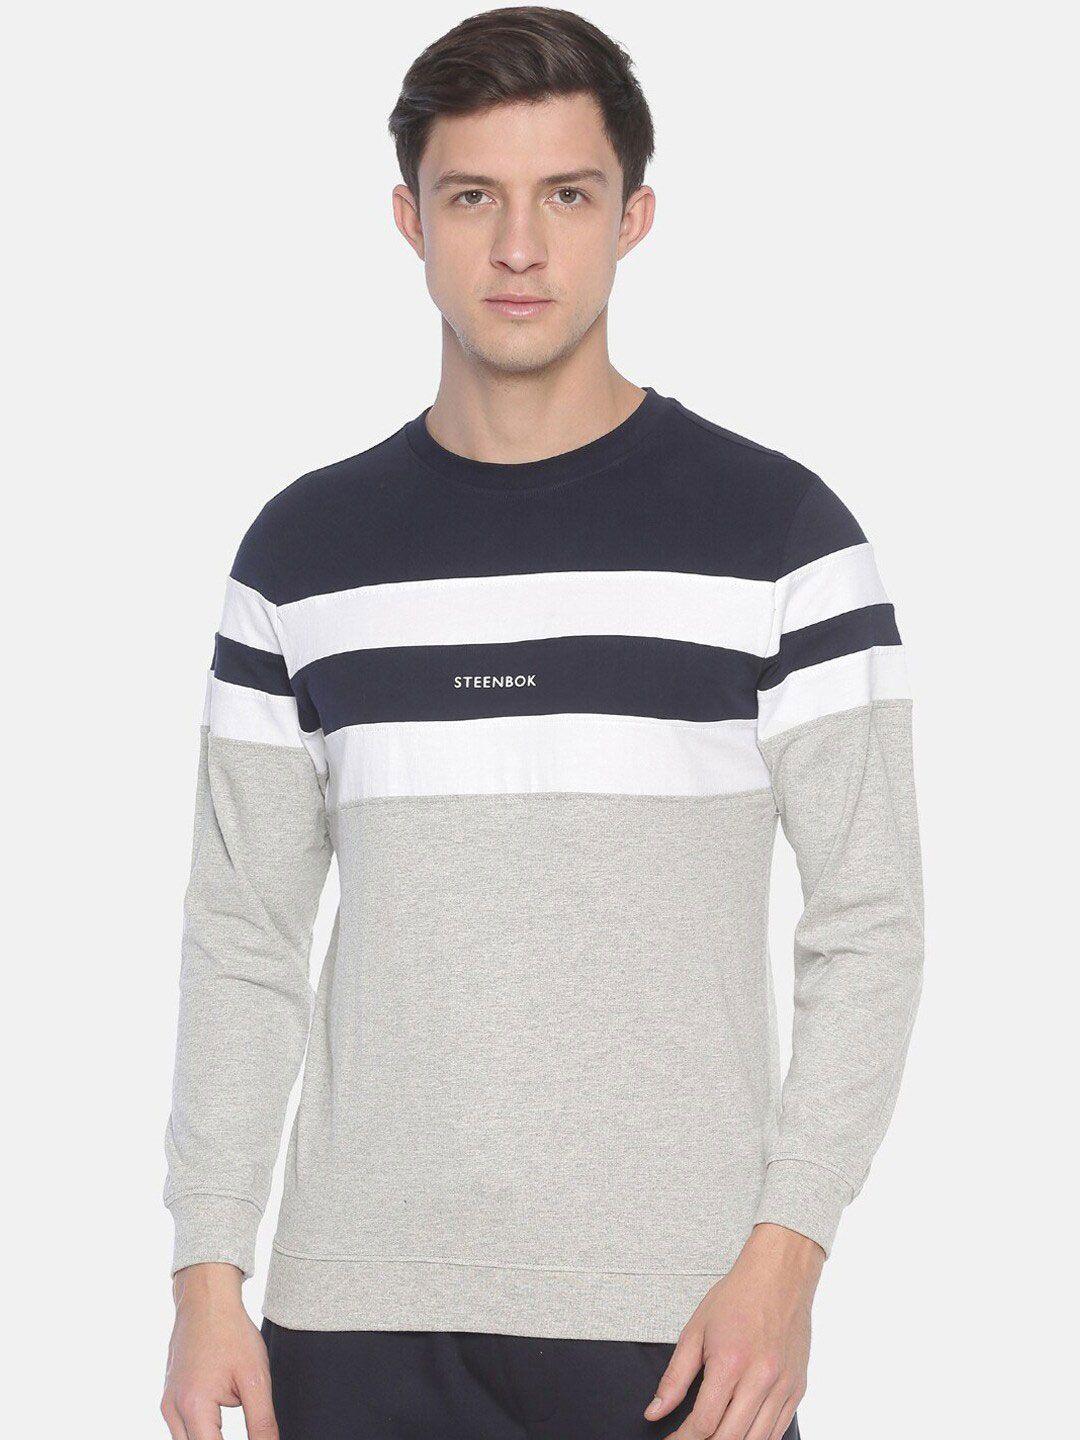 steenbok-men-grey-striped-sweatshirt